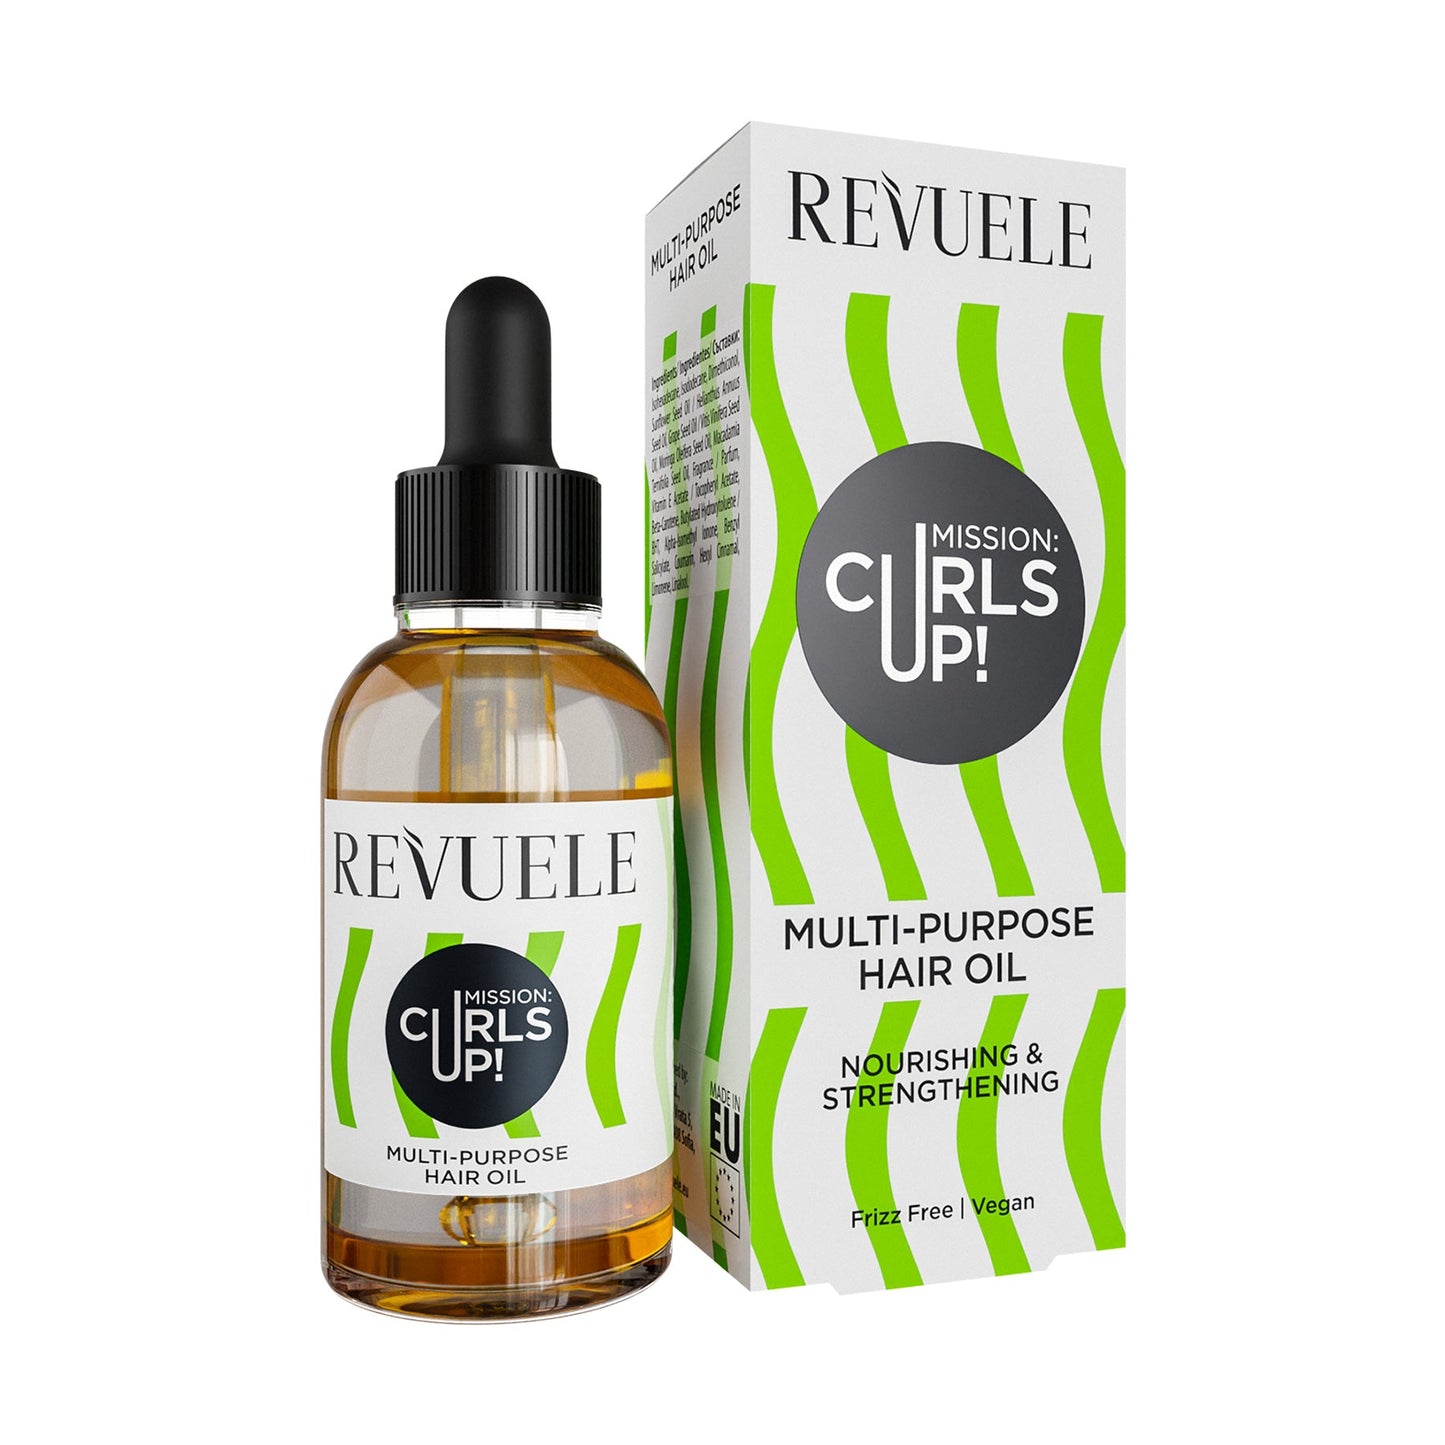 Revuele Mission: Curls up! Multi-purpose Oil